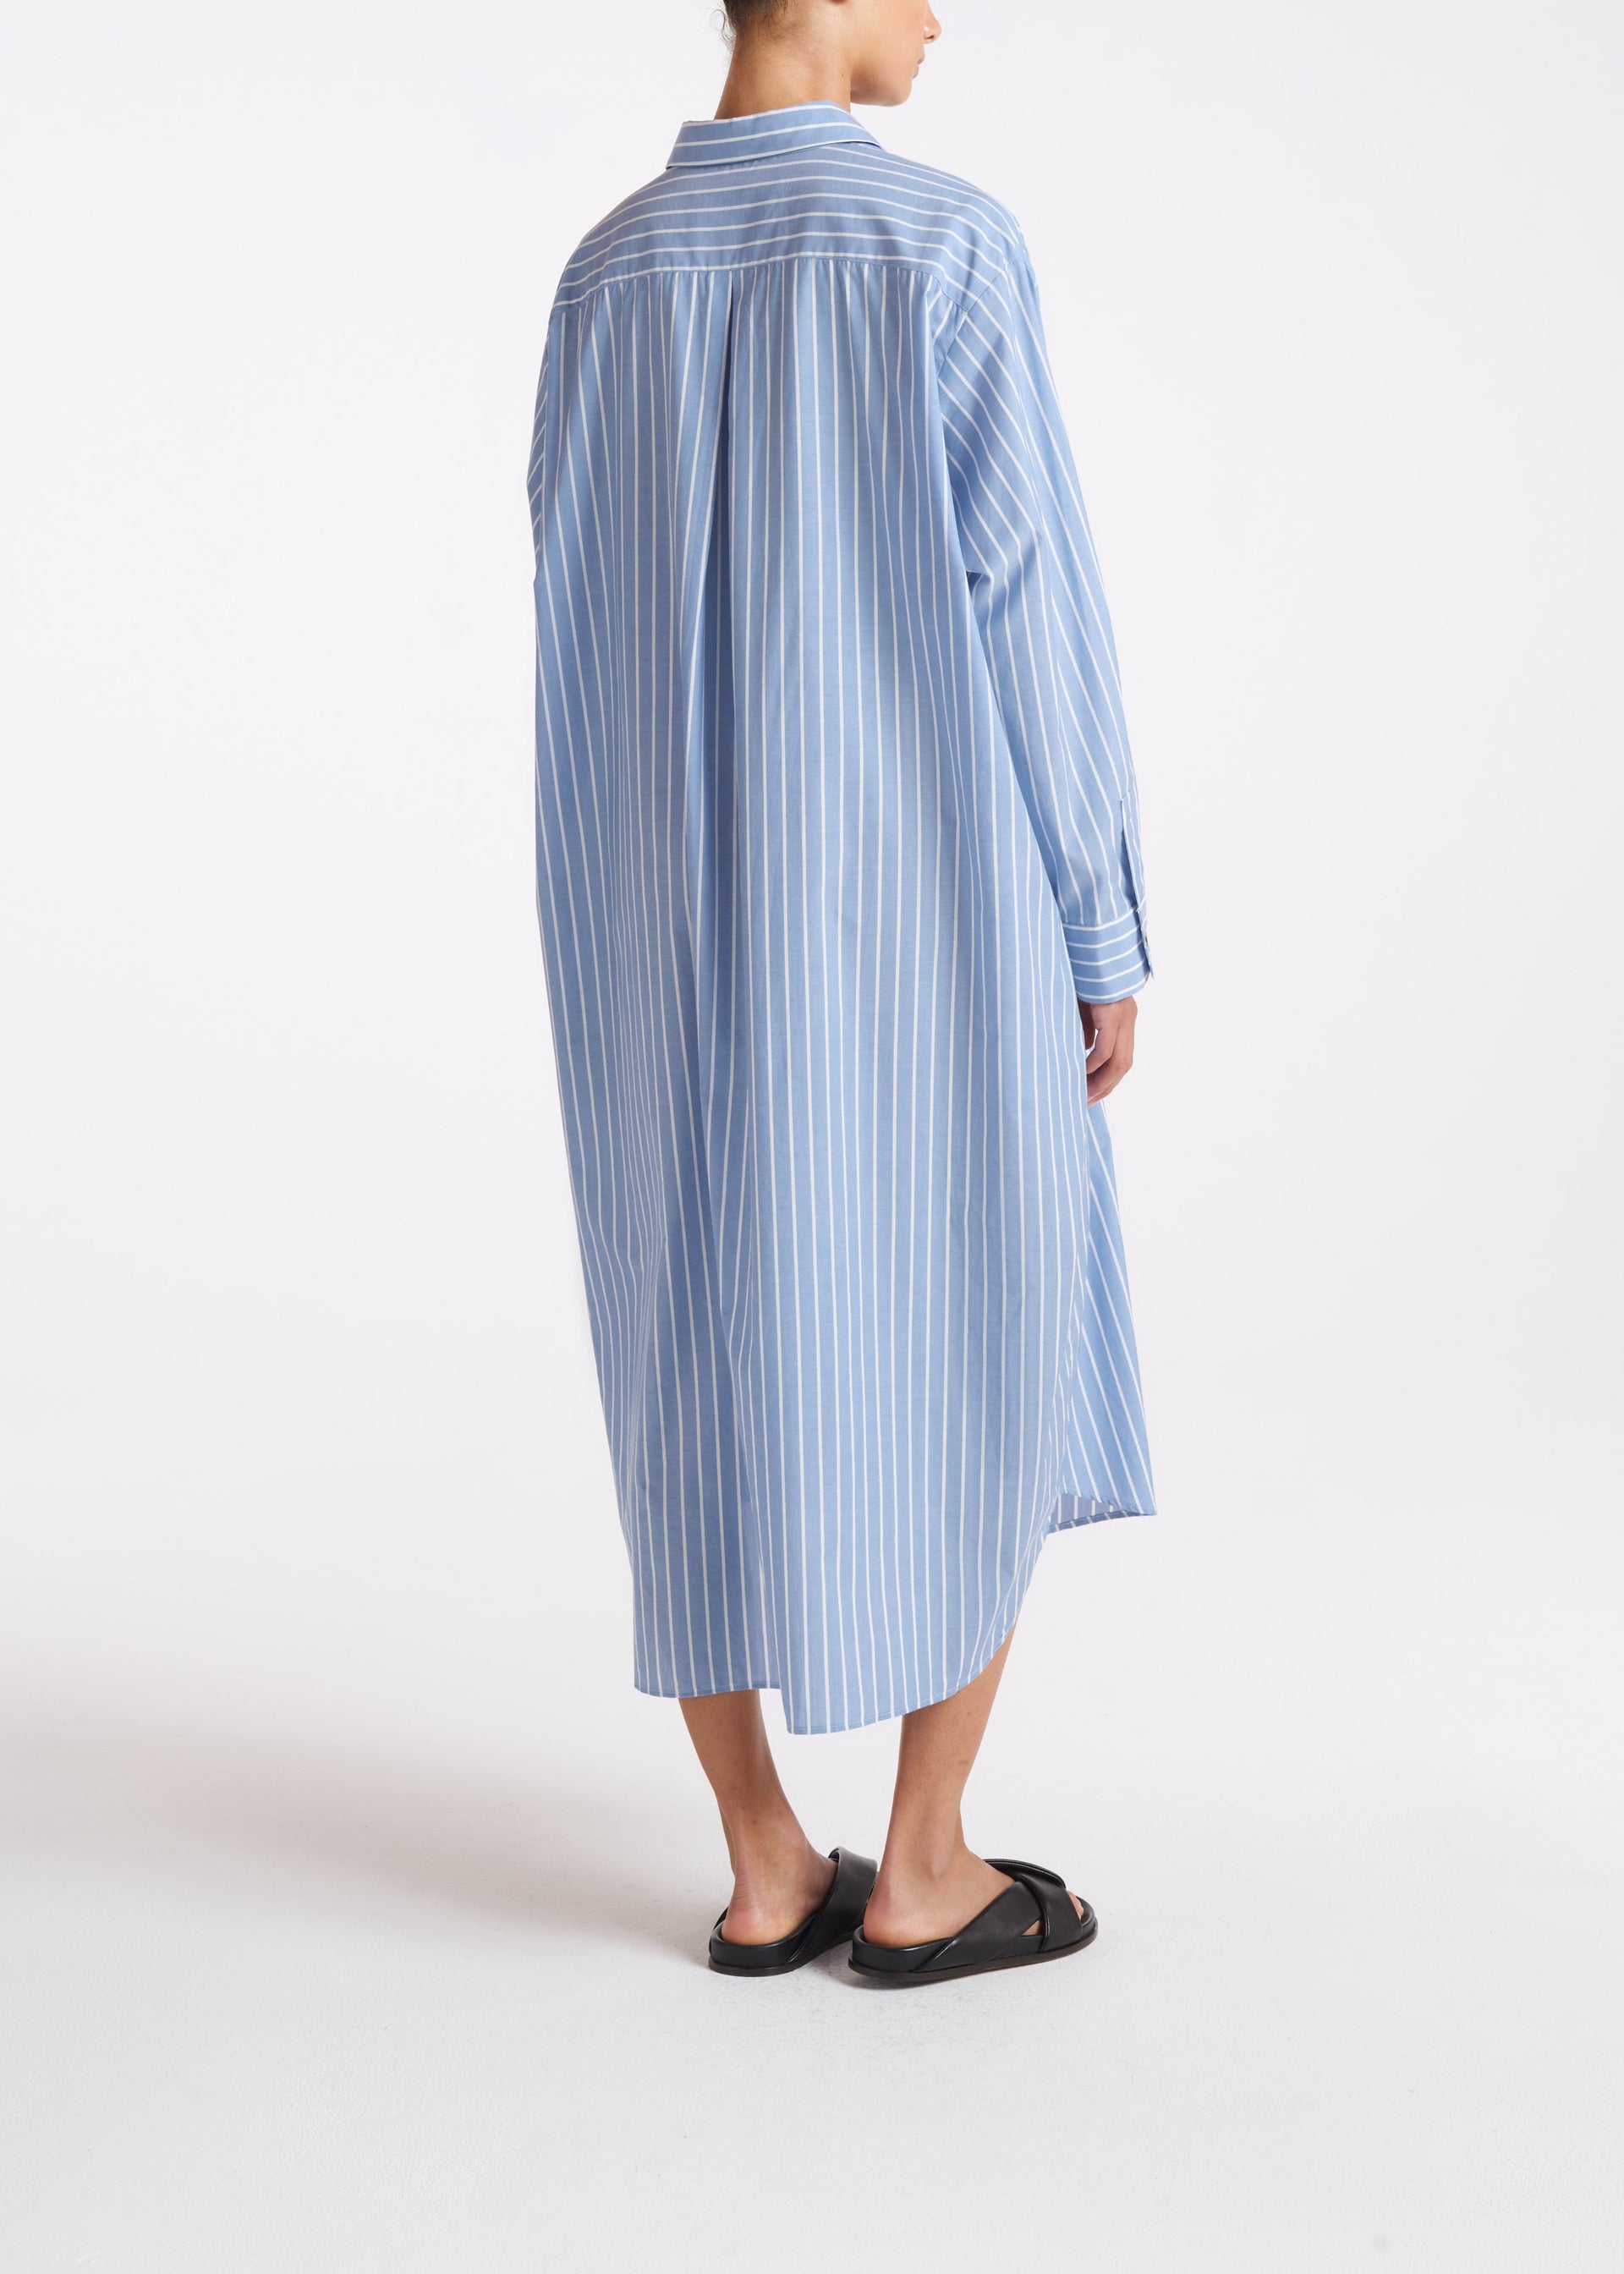 Allegra Shirt Dress Blue & White Stripe Cotton Silk